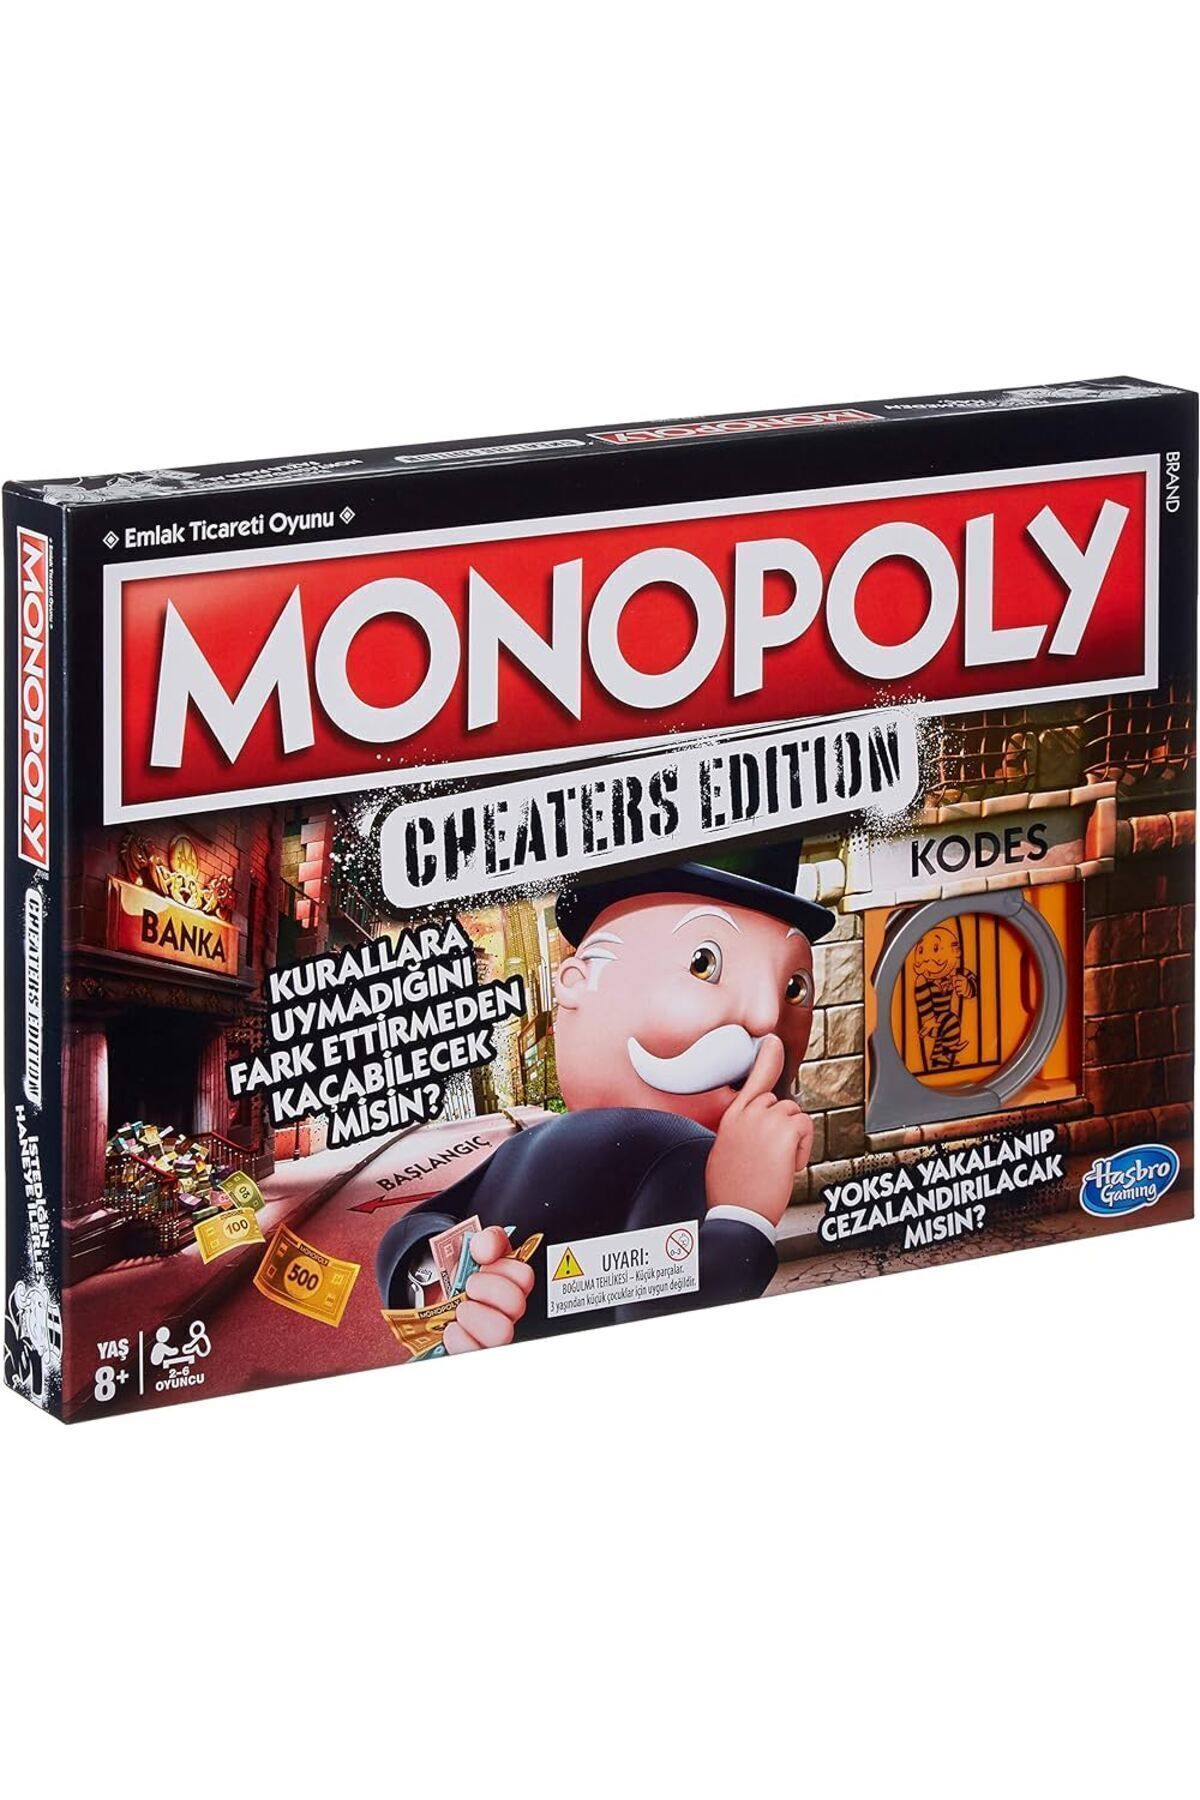 Monopoly Cheater Edition Kodesten Kaçış